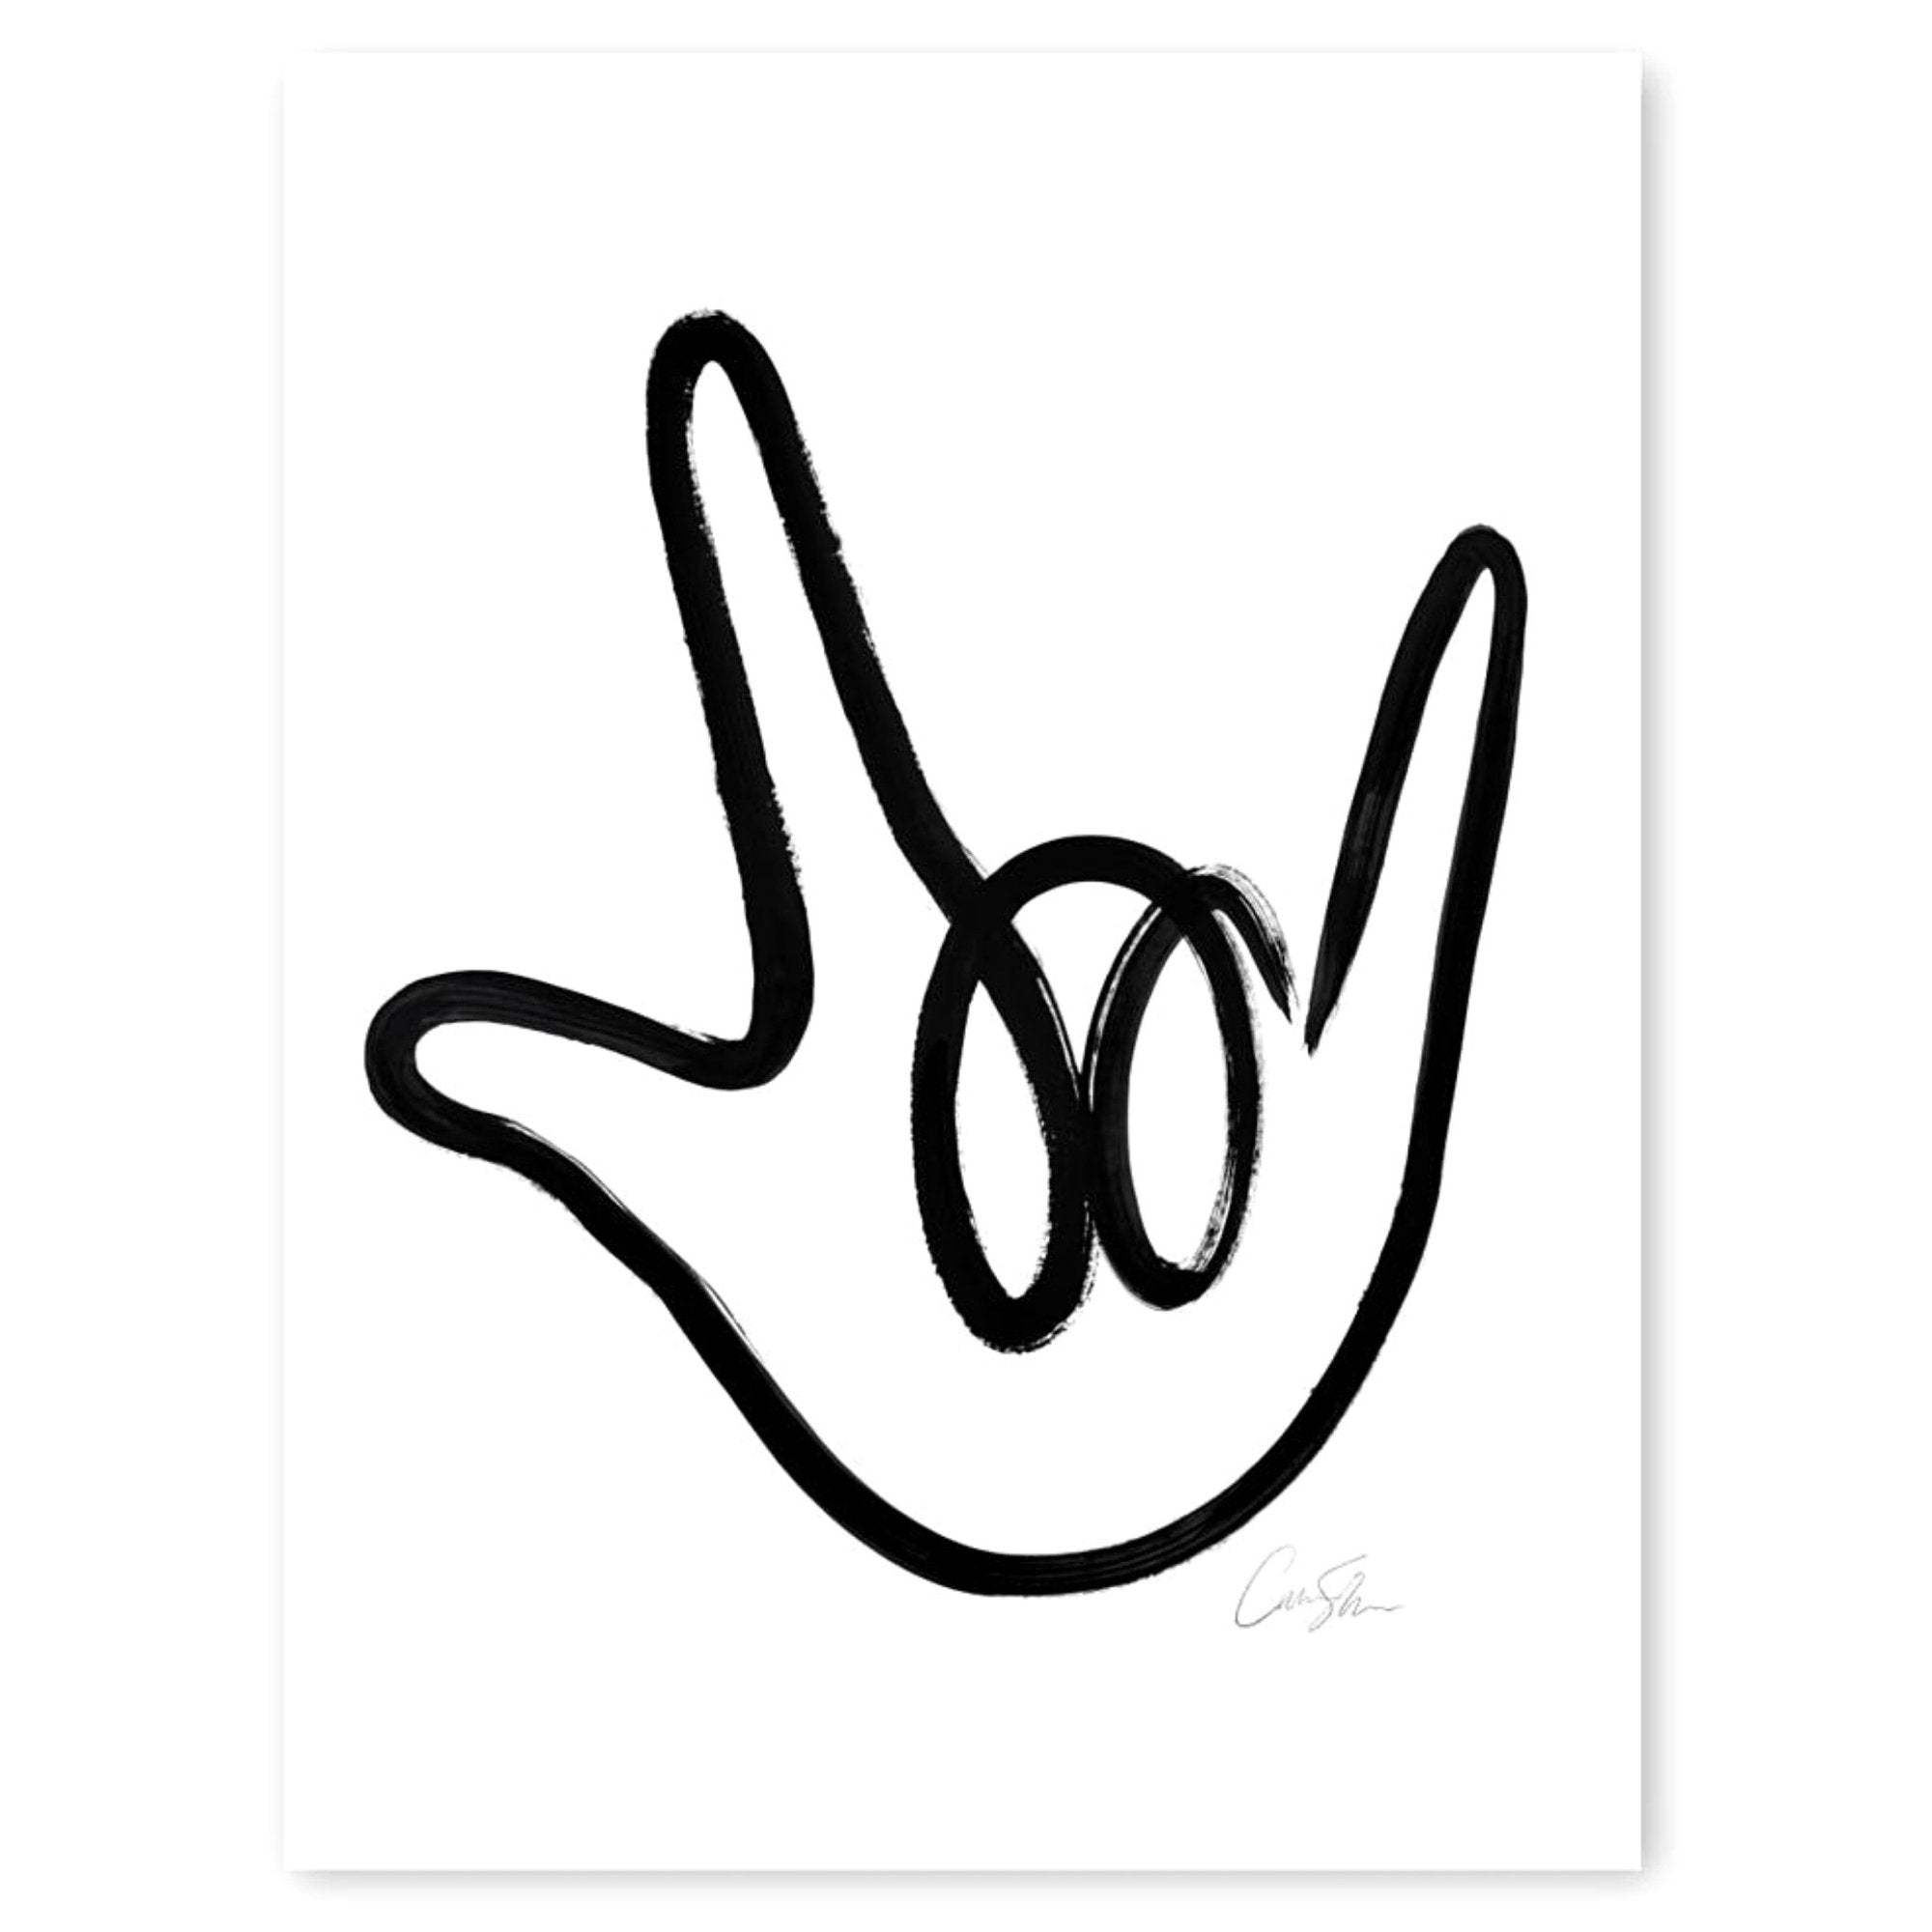 ASL I Love You Print